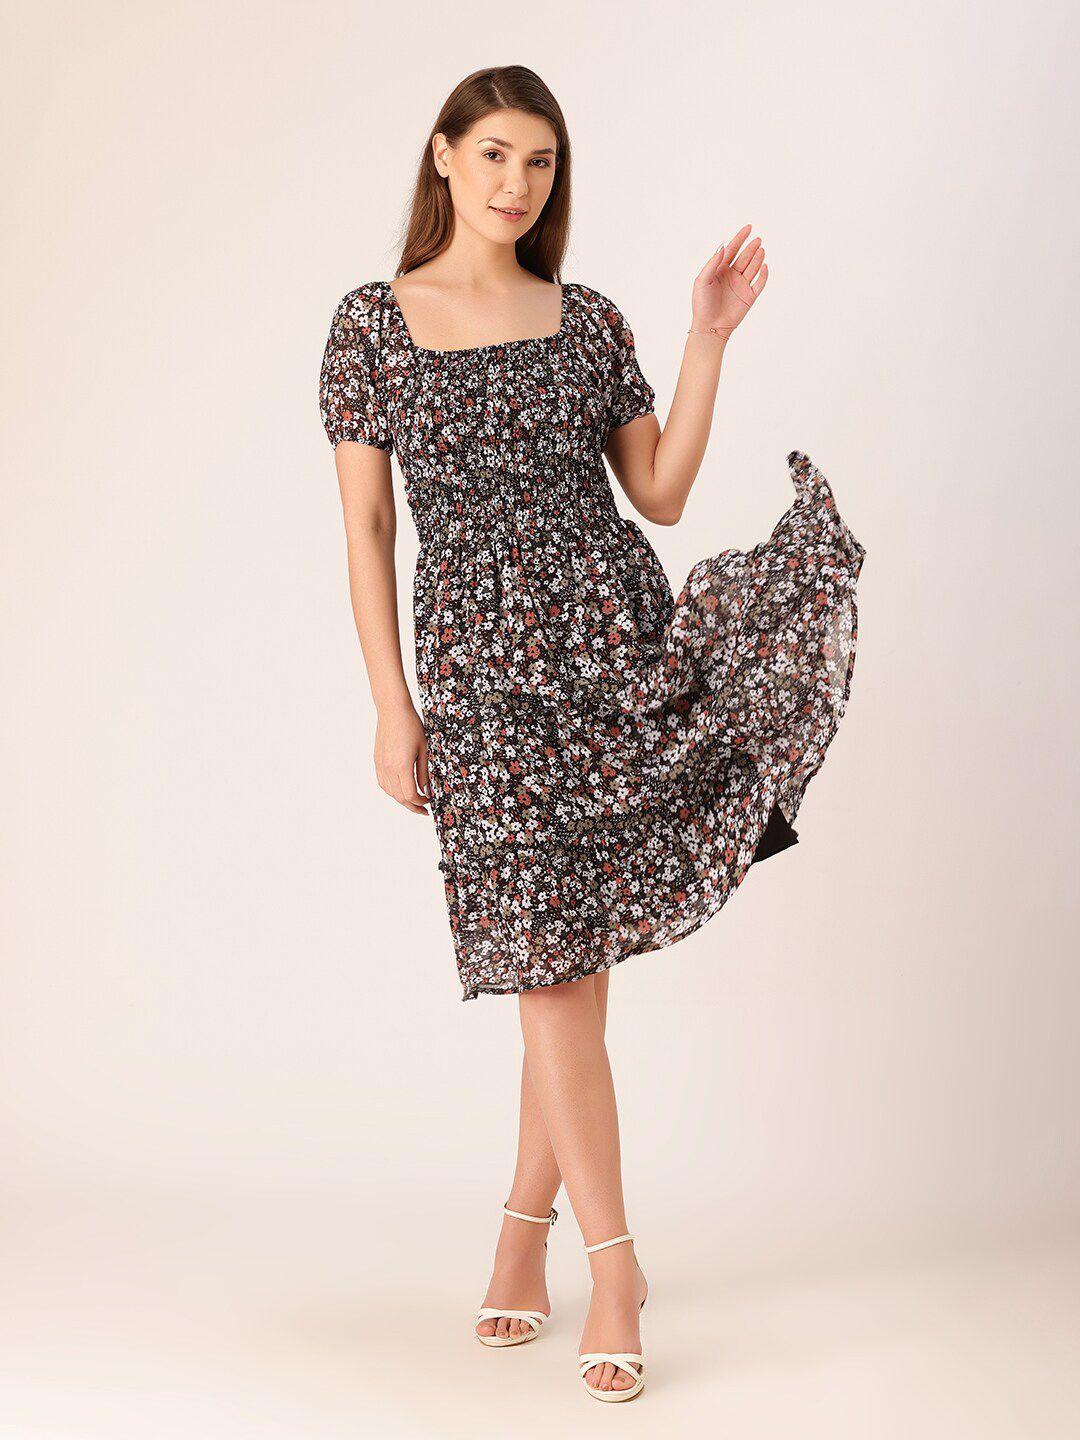 dressberry floral georgette dress